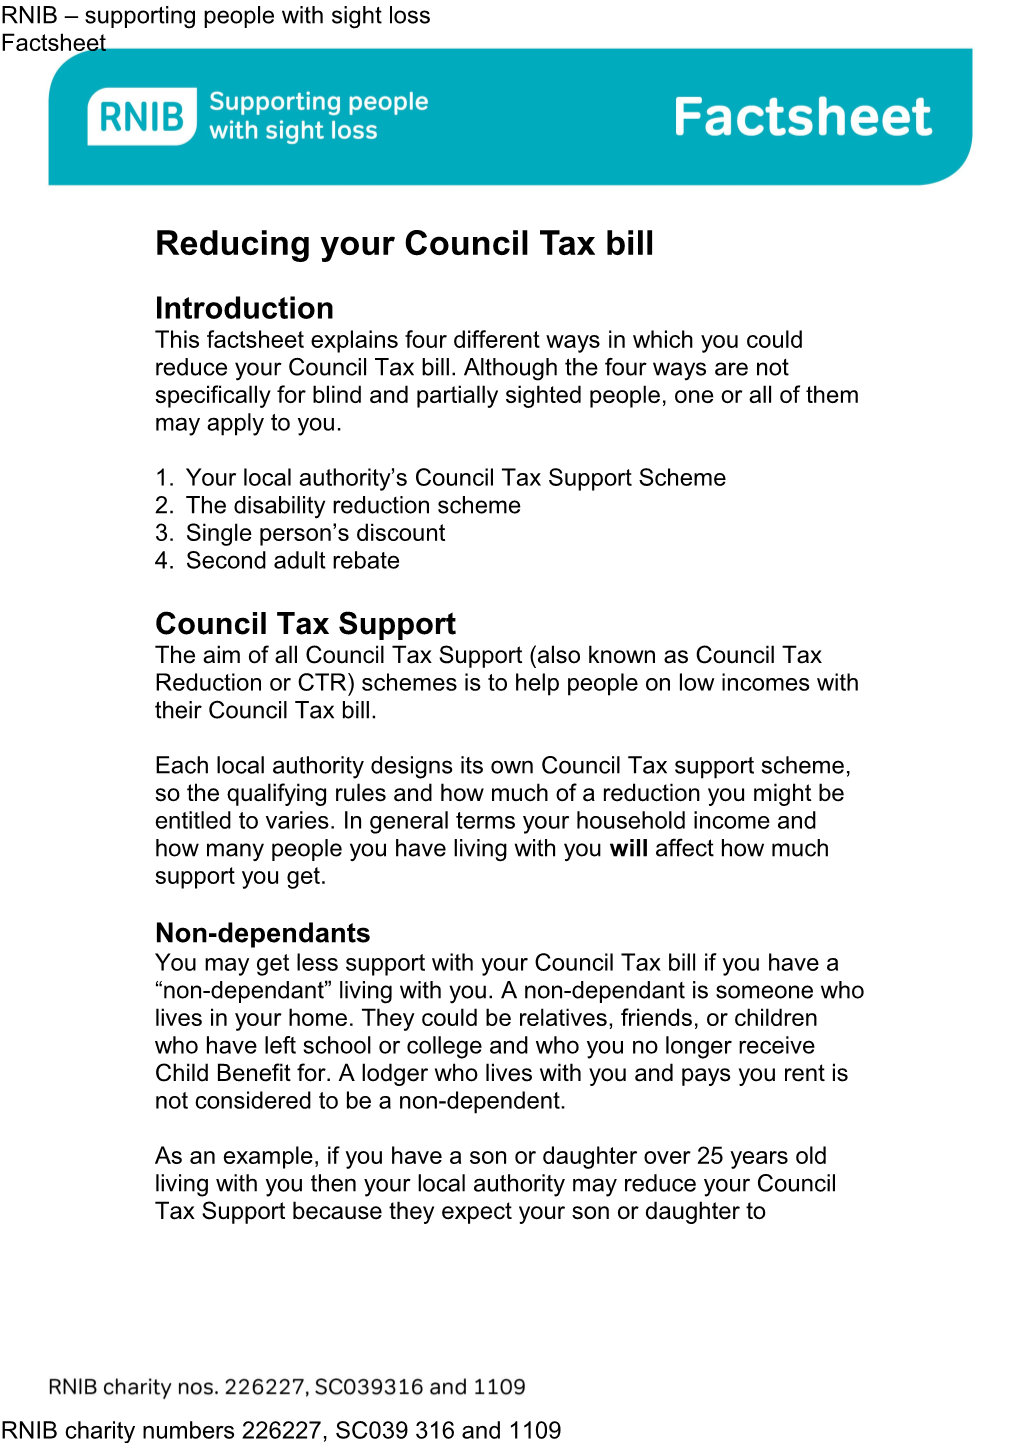 Reducing Your Council Tax Bill Factsheet